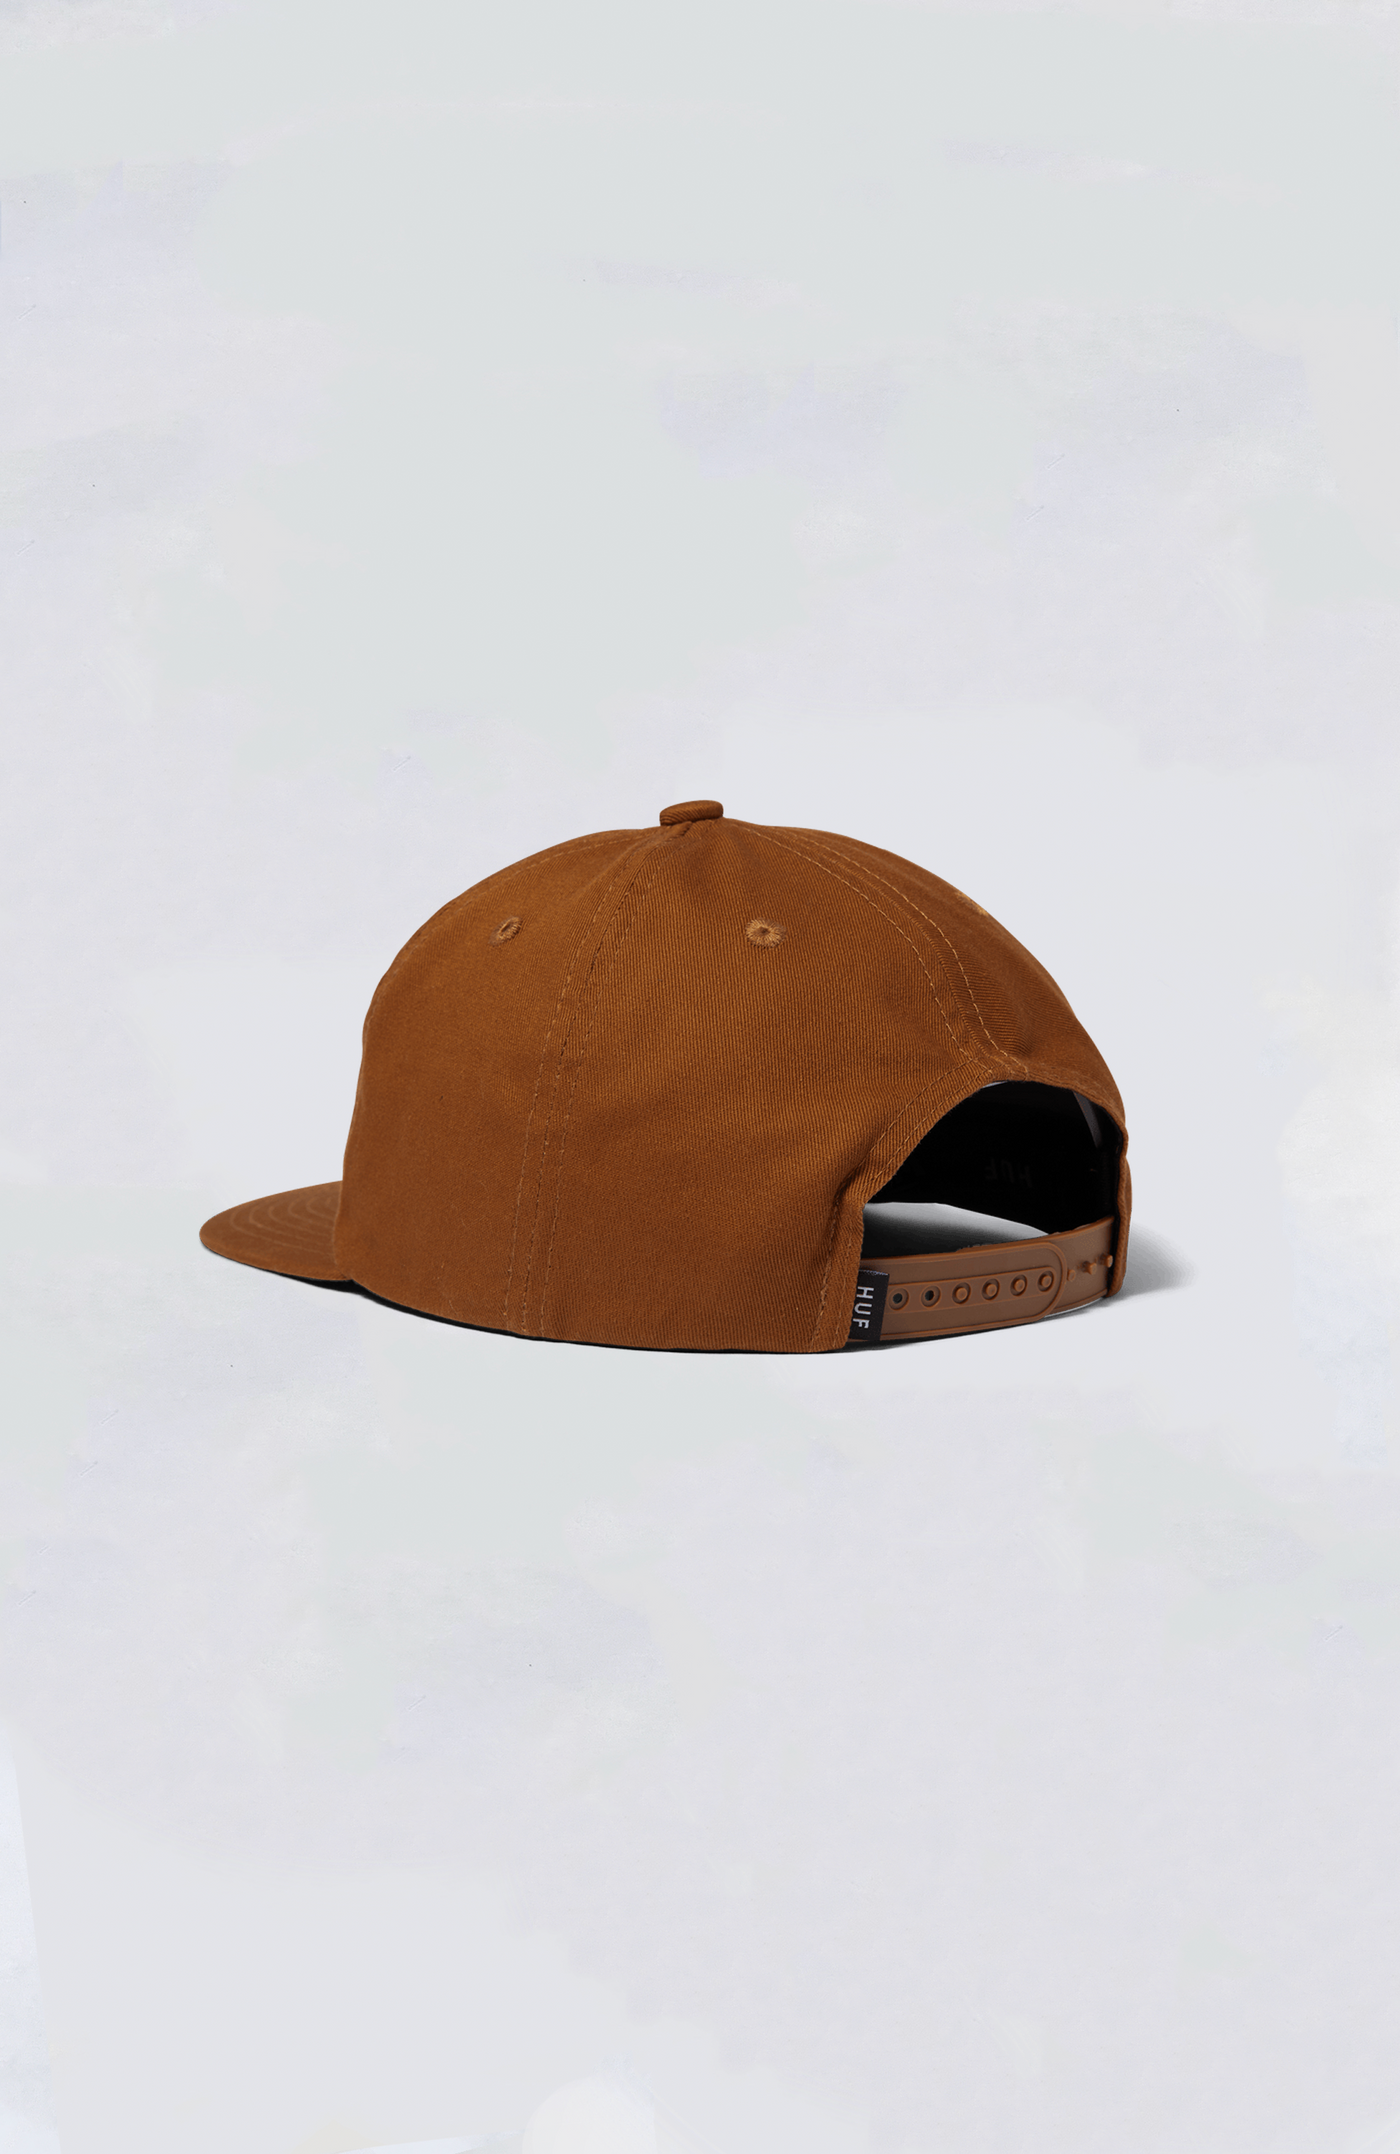 HUF - HUF Set Box Snapback Hat